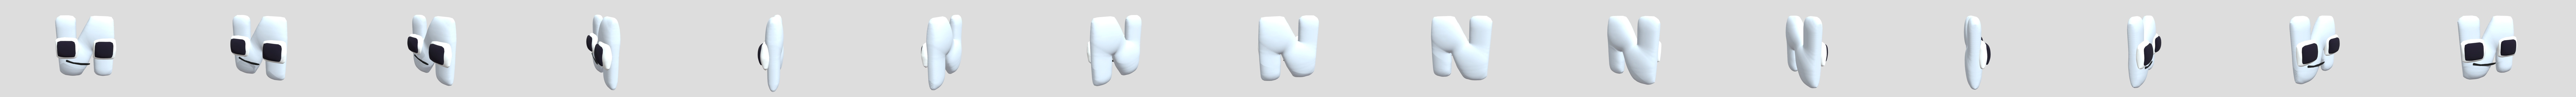 Harrymations-c-russian-alphabet-lore - 3D model by danielbernegger16  (@danielbernegger16) [afb1a7f]